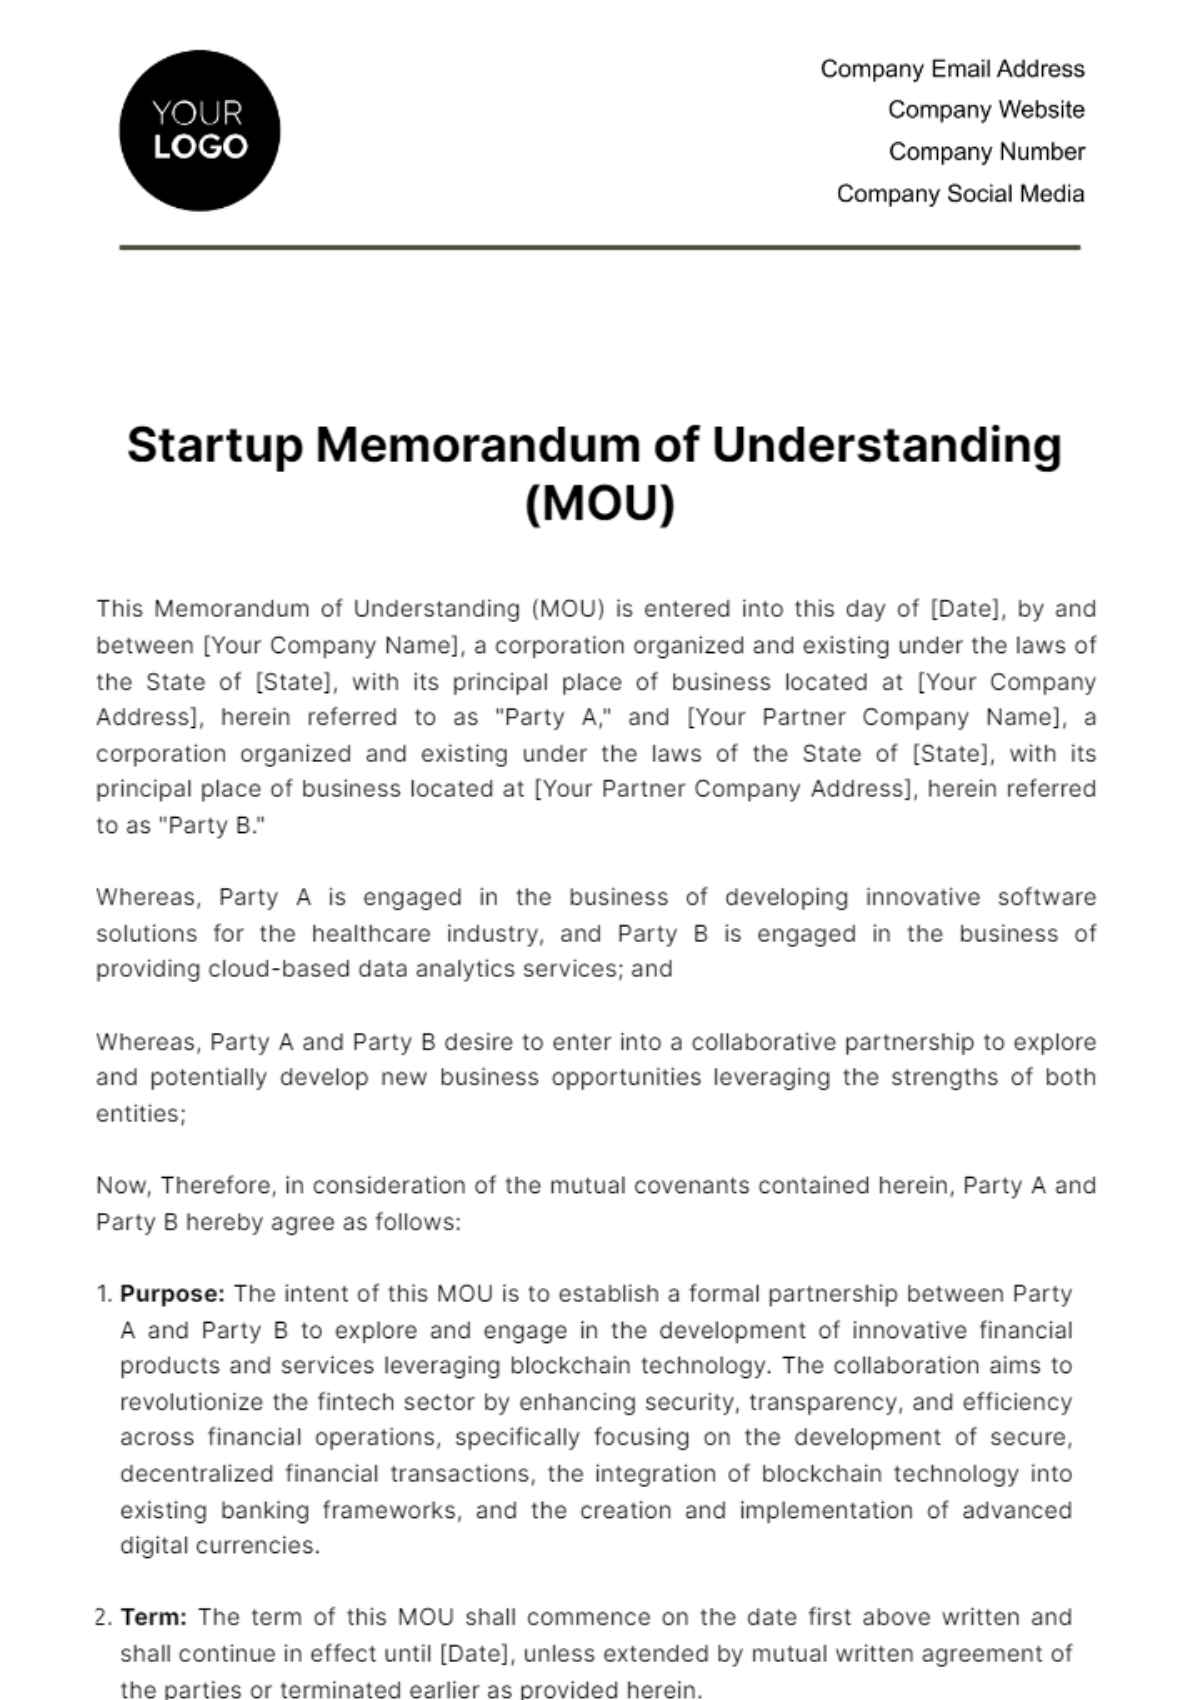 Free Startup Memorandum of Understanding (MOU) Template